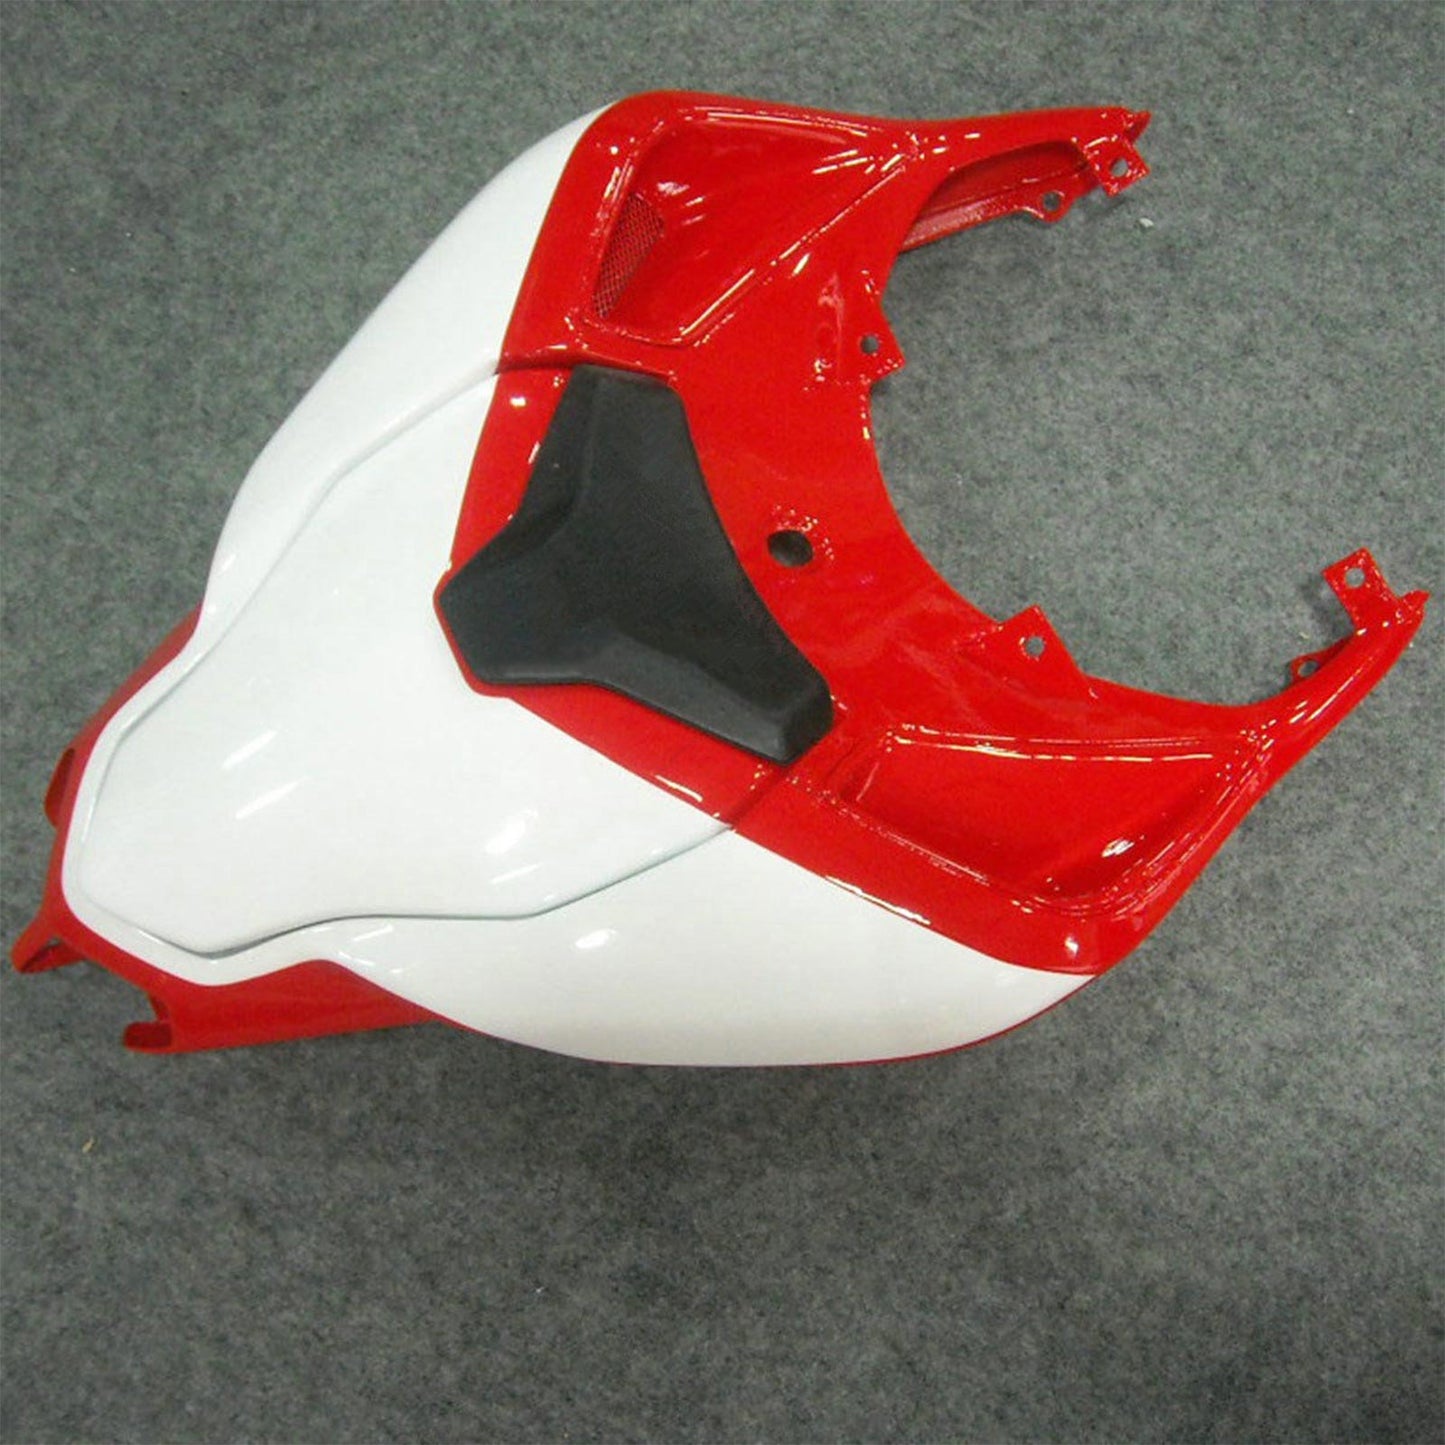 2007-2012 Ducati 1098 848 1198 Red ABS Plastic Fairing Bodywork #19